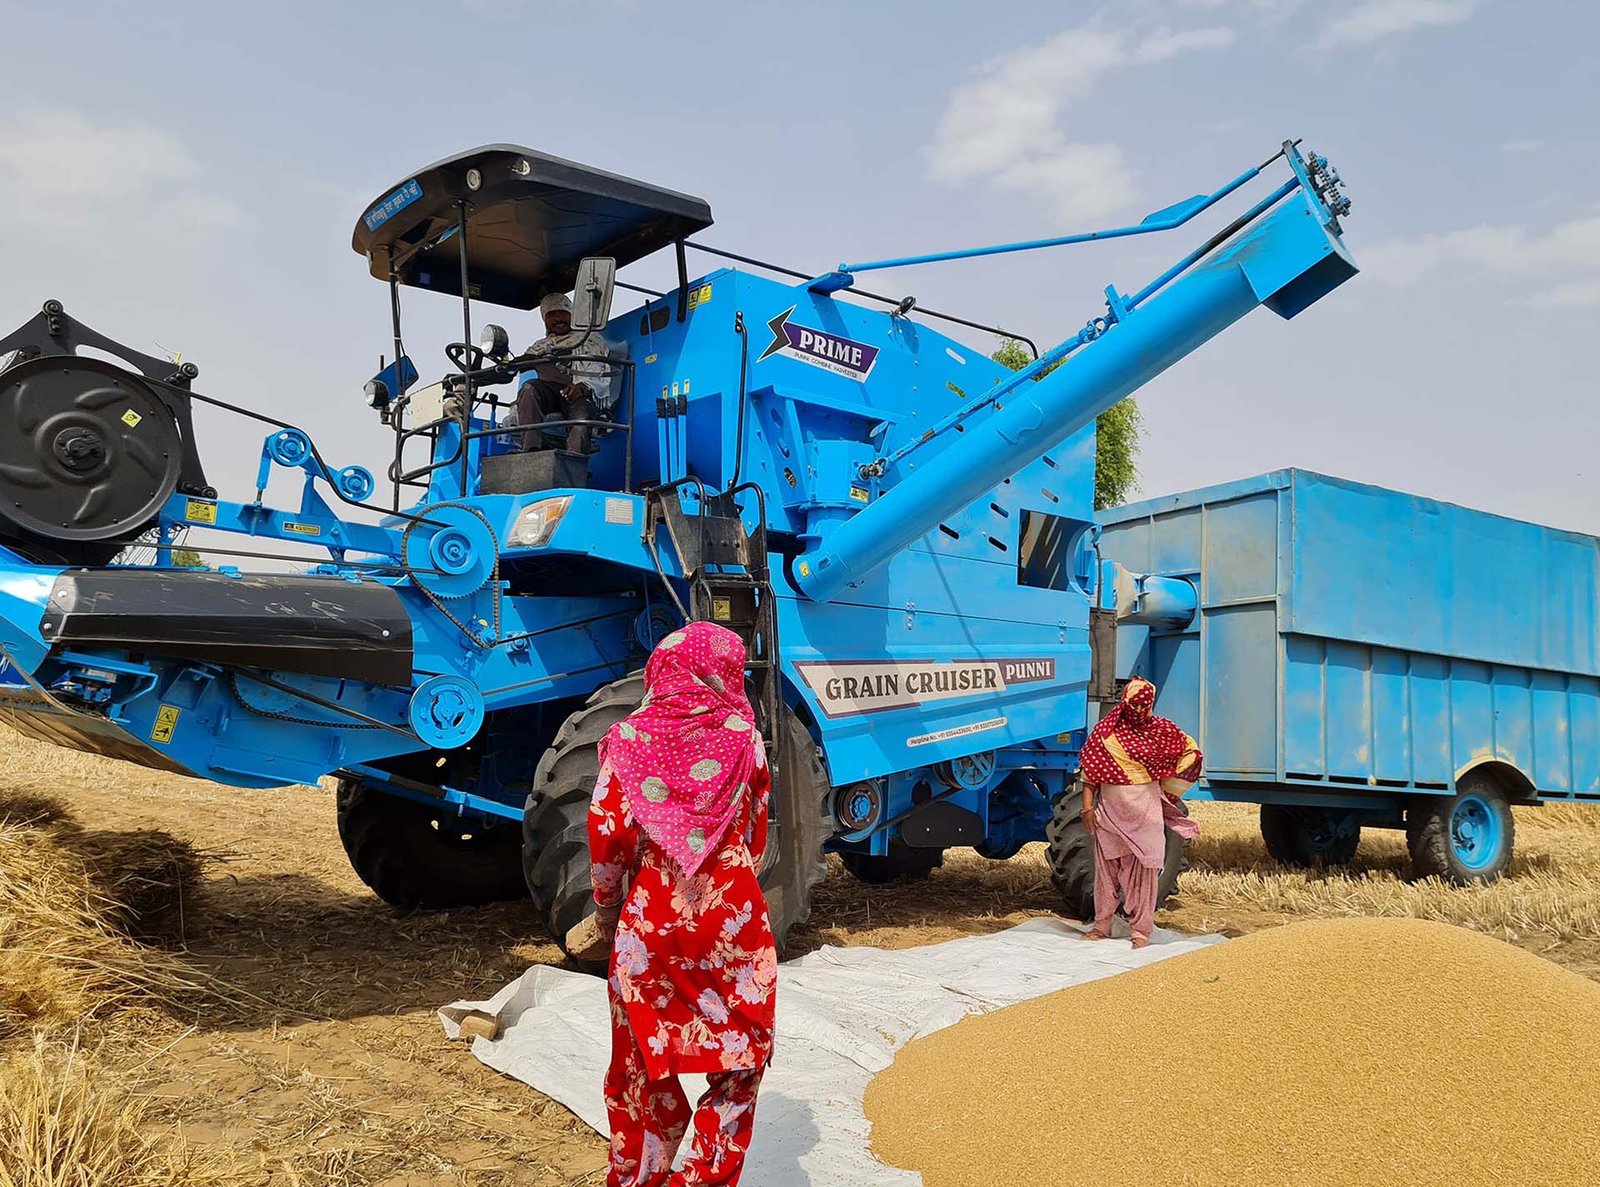 Grain Cruiser combine harvester unloading grain